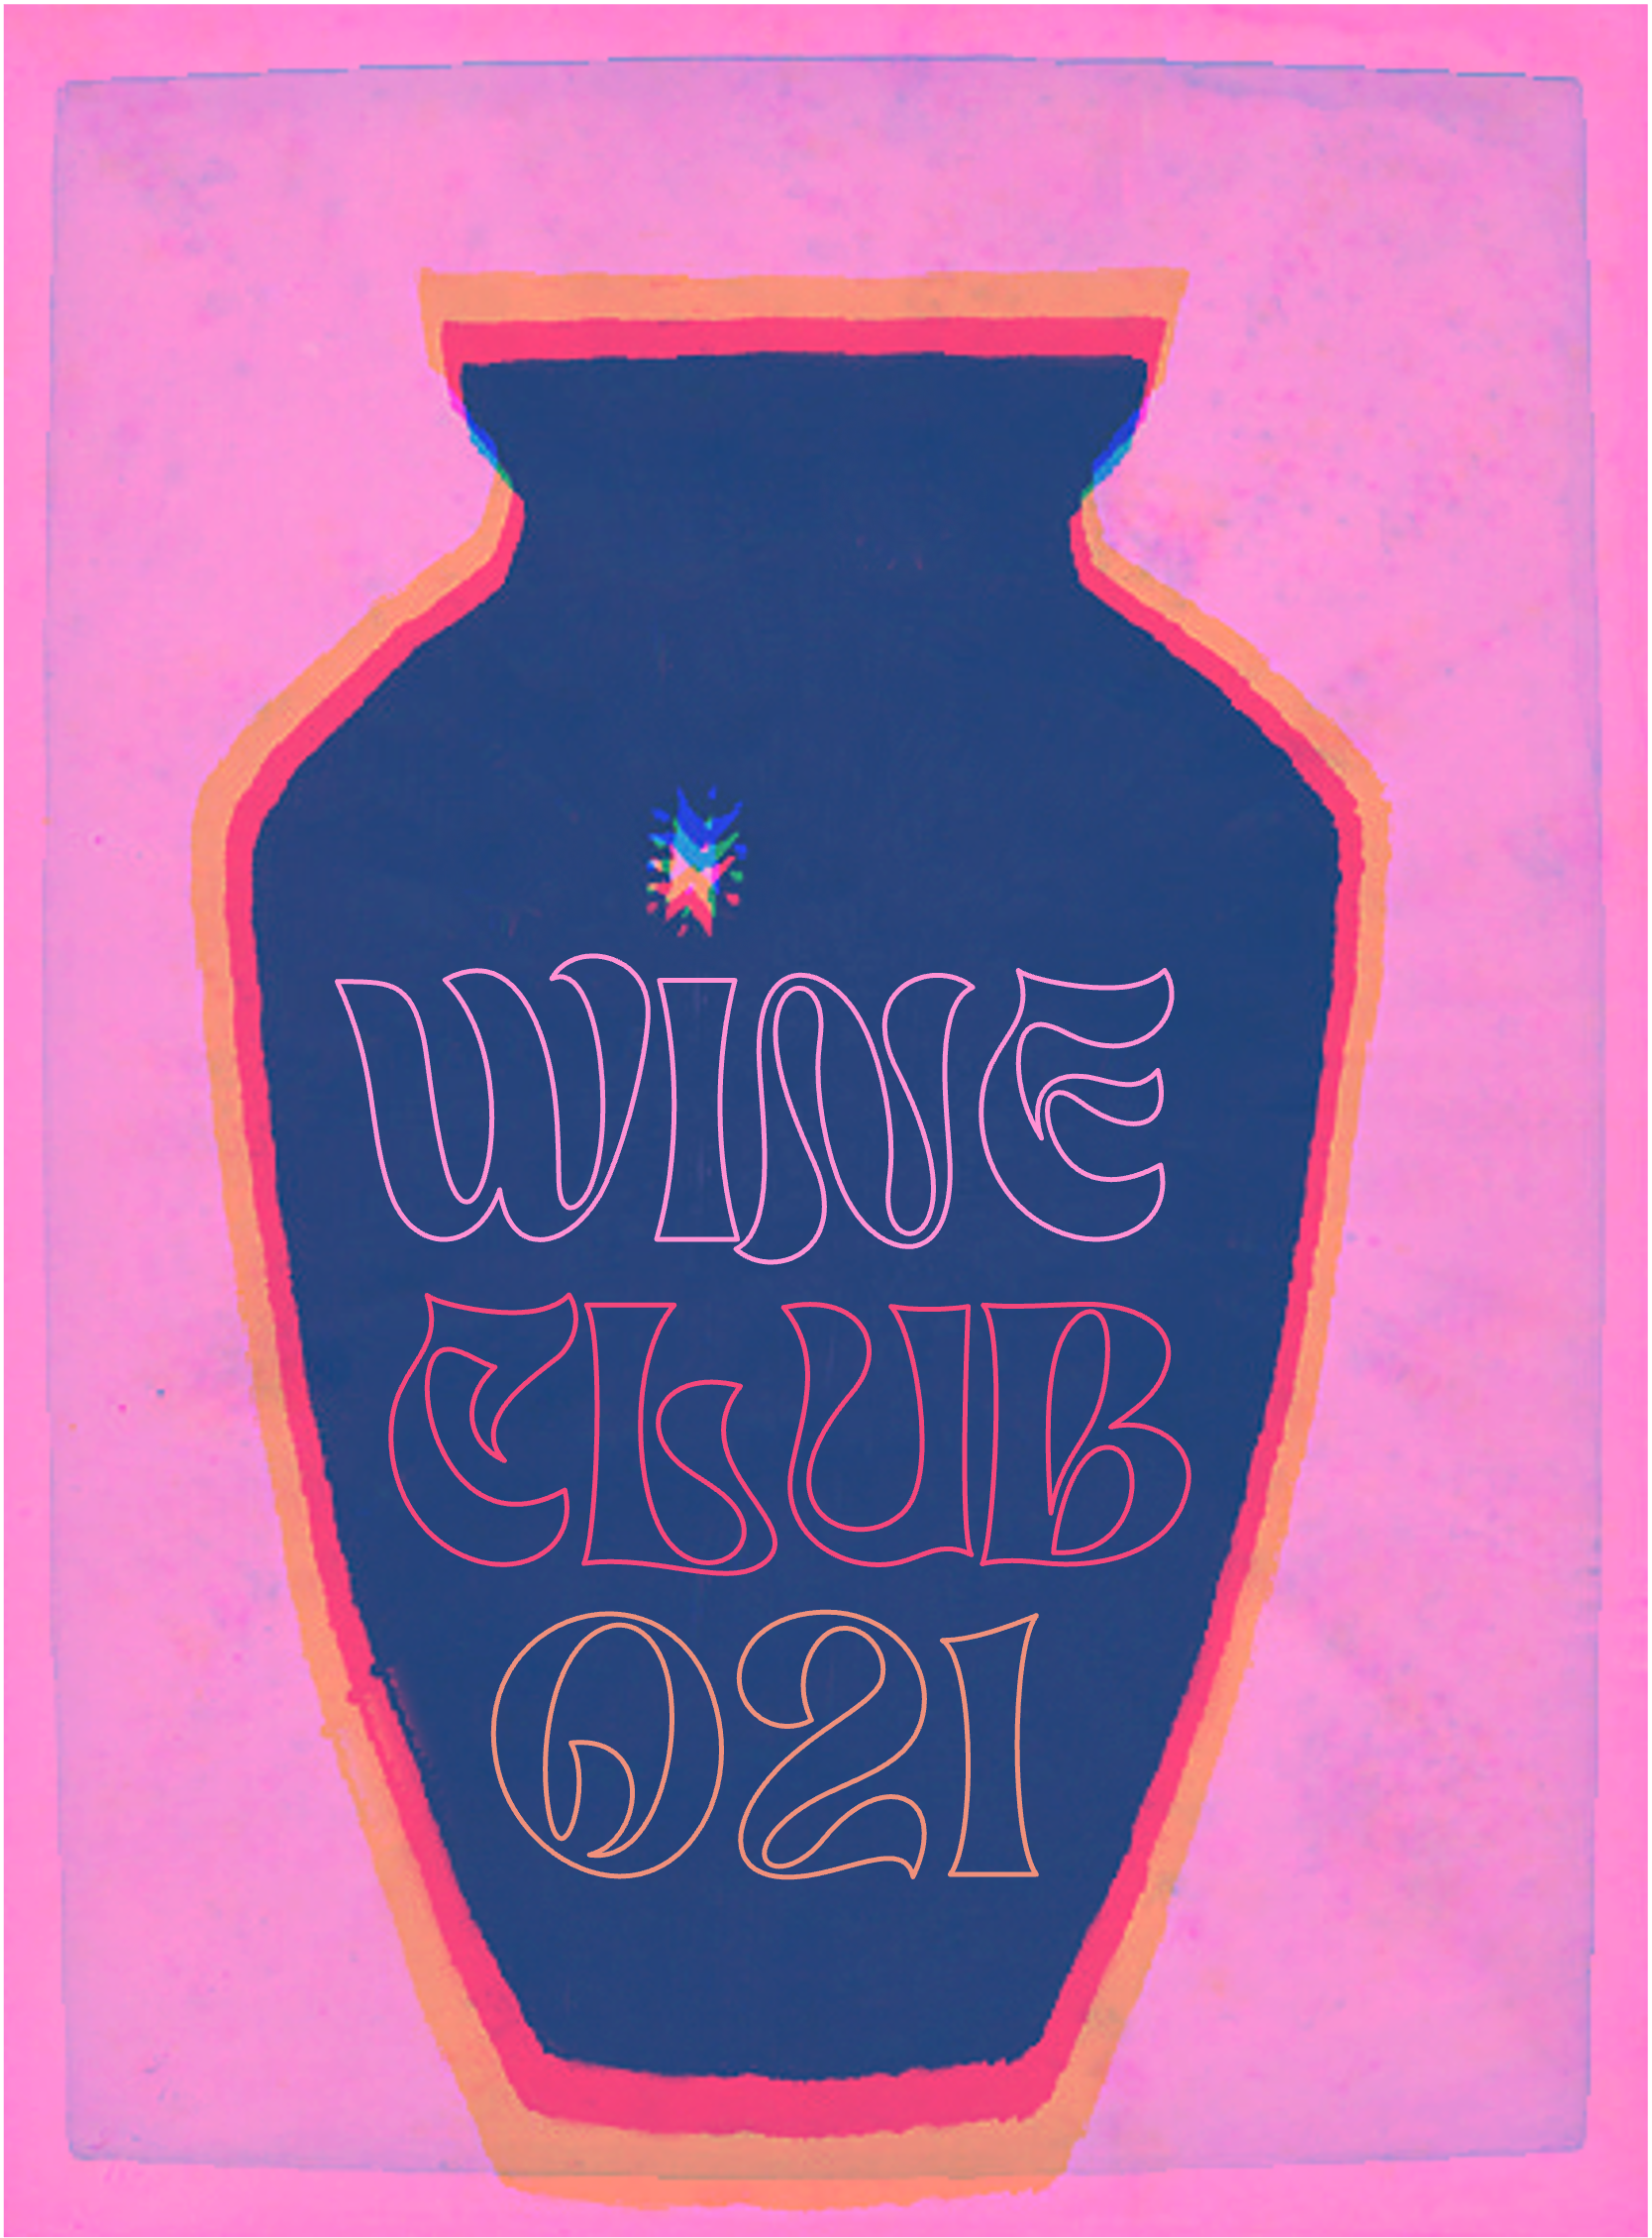 Wine Club 021 Dates Announced